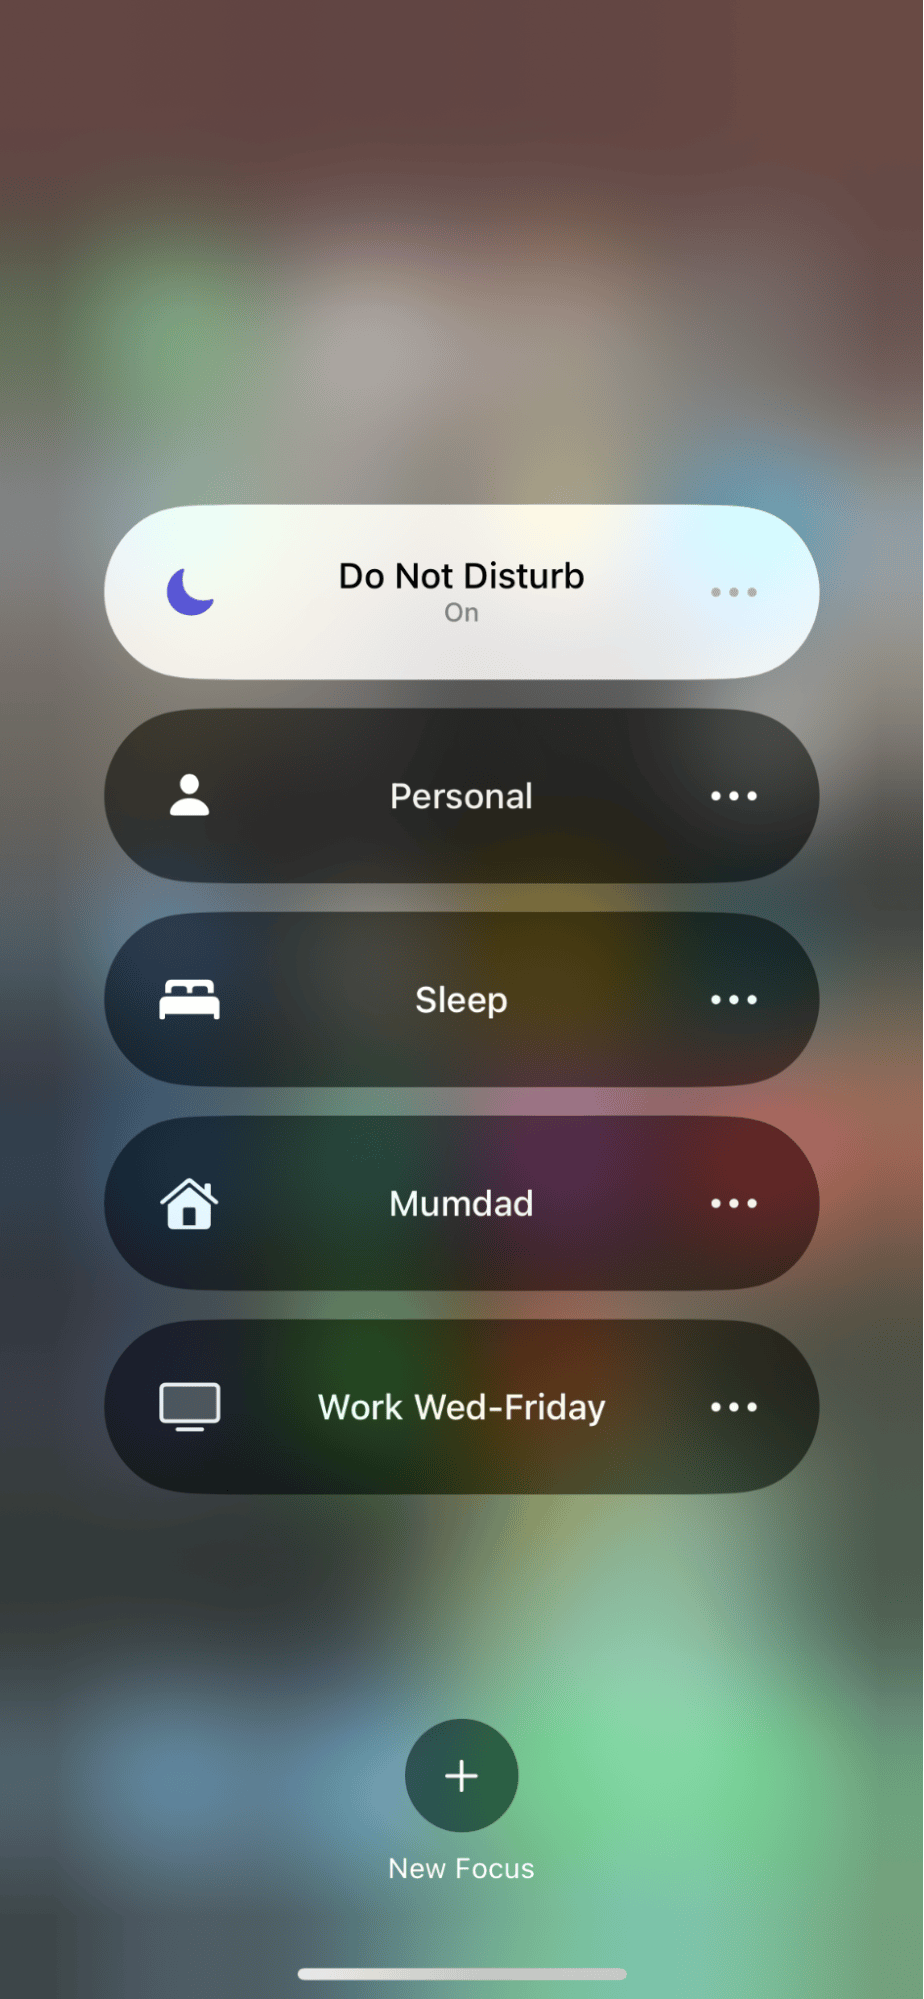 Do Not Disturb mode on iPhone